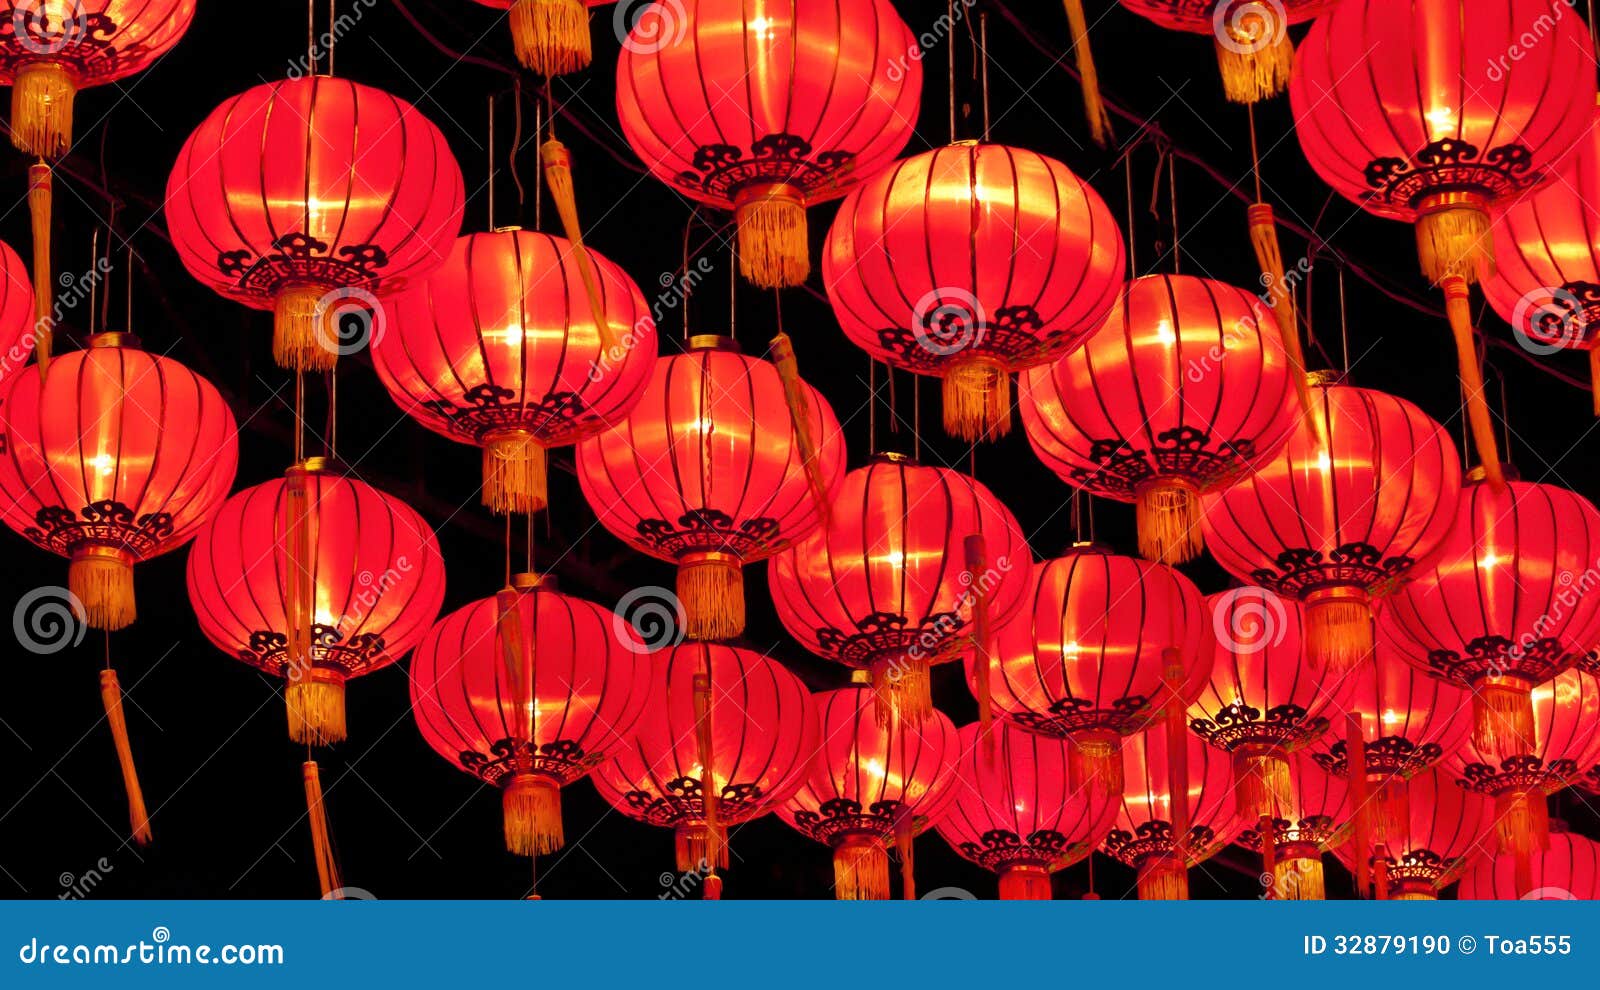 chinese lanterns aspect ratio 16:9